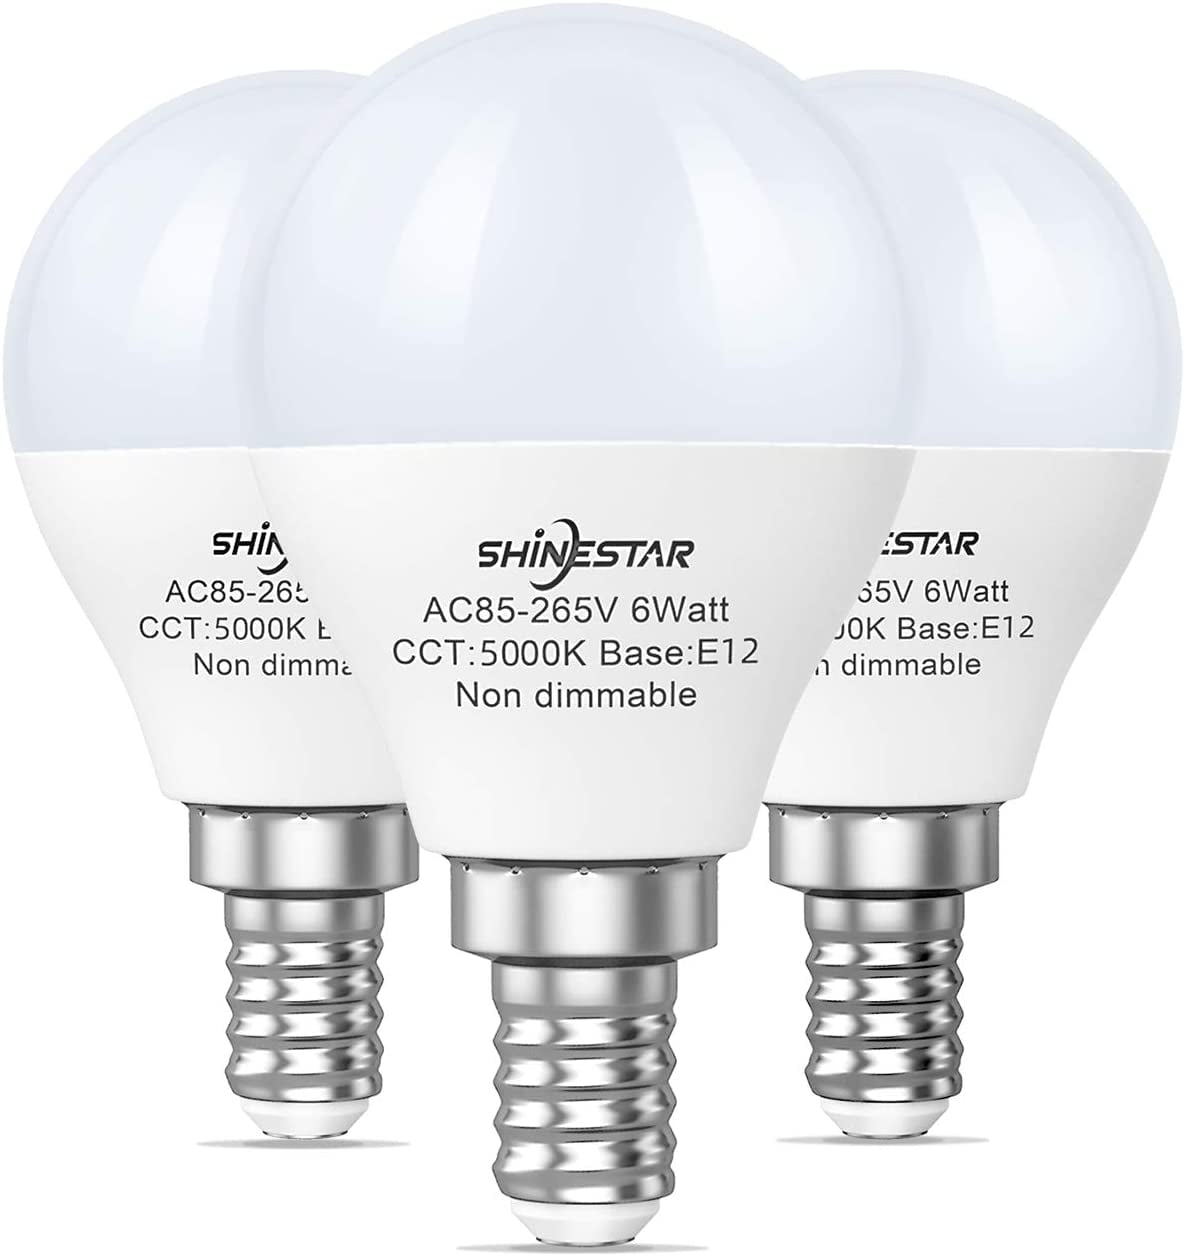 knoflook Beschikbaar Ik heb een Engelse les SHINESTAR 3 Pack A15 LED Ceiling Fan Light Bulbs, 60W Equivalent, 2700K  Warm White, E12 Small Base, Non-dimmable, Energy Saving - Walmart.com